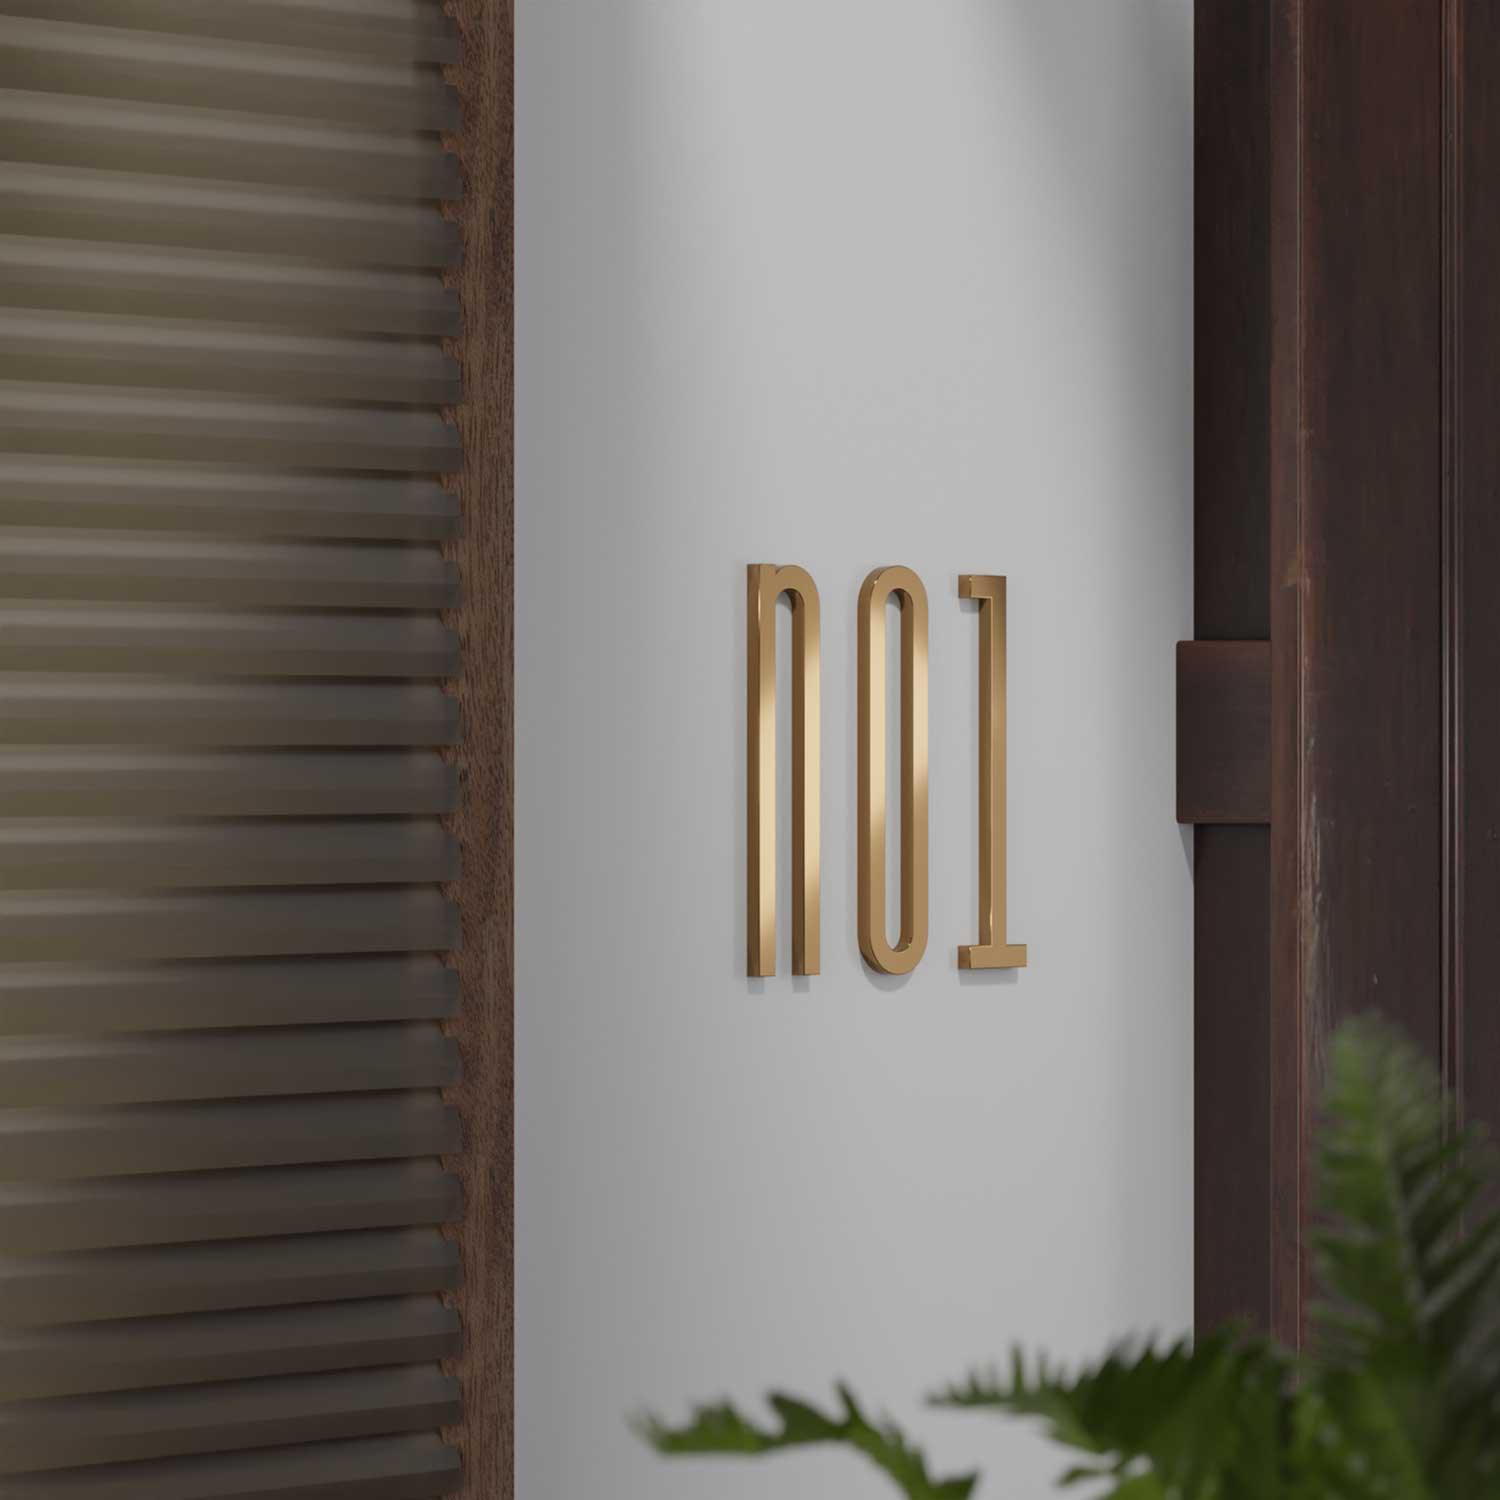 Komoda - Modern Brass Door Numbers & Letters - Housenama